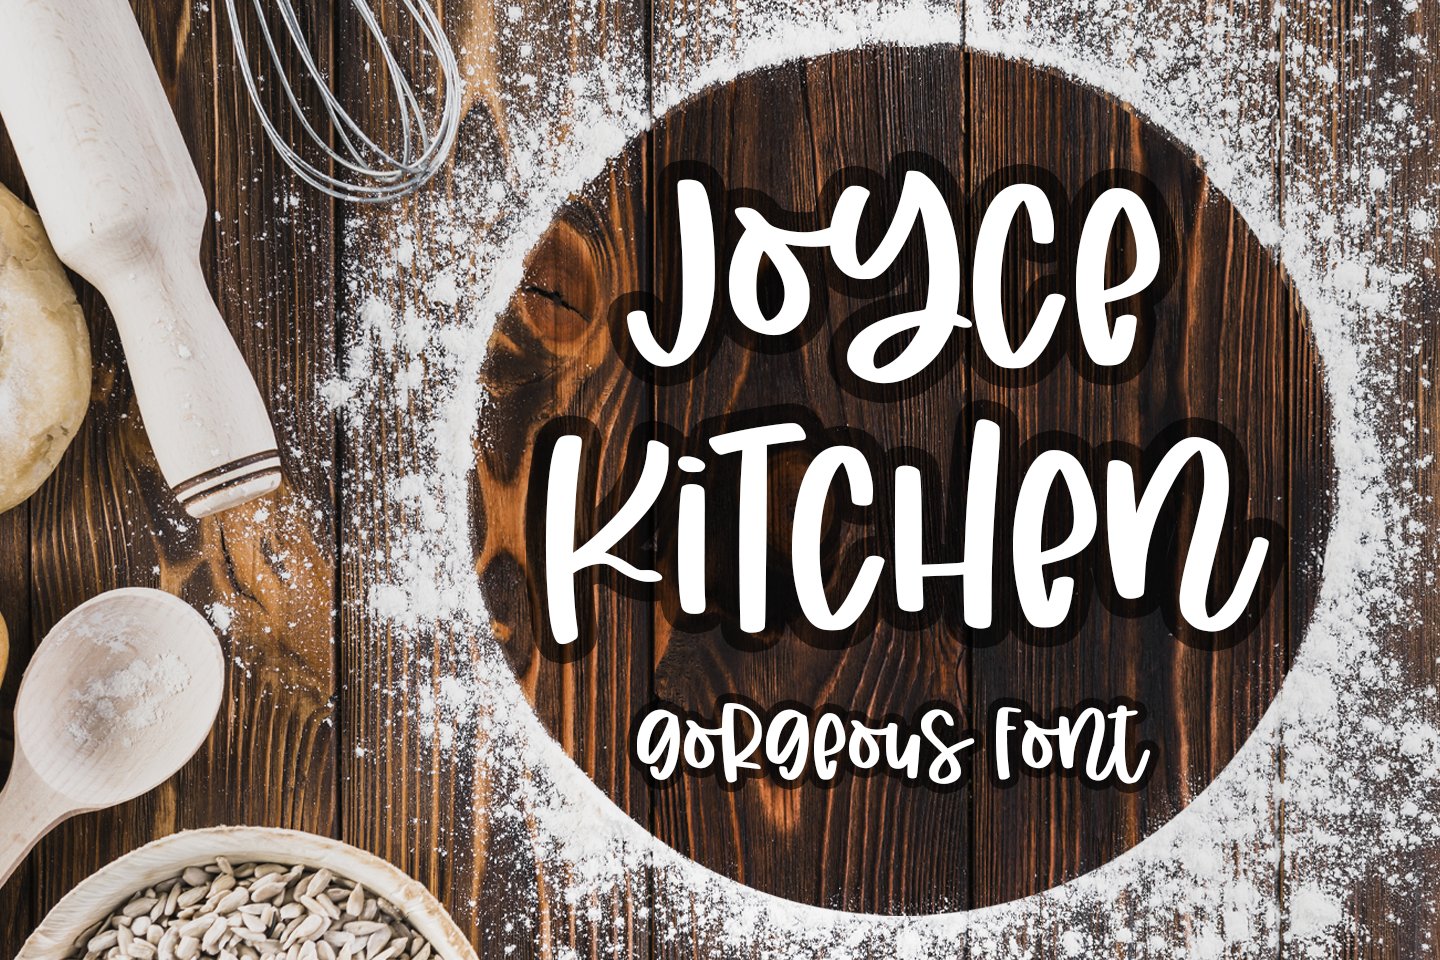 Joyce Kitchen cover image.